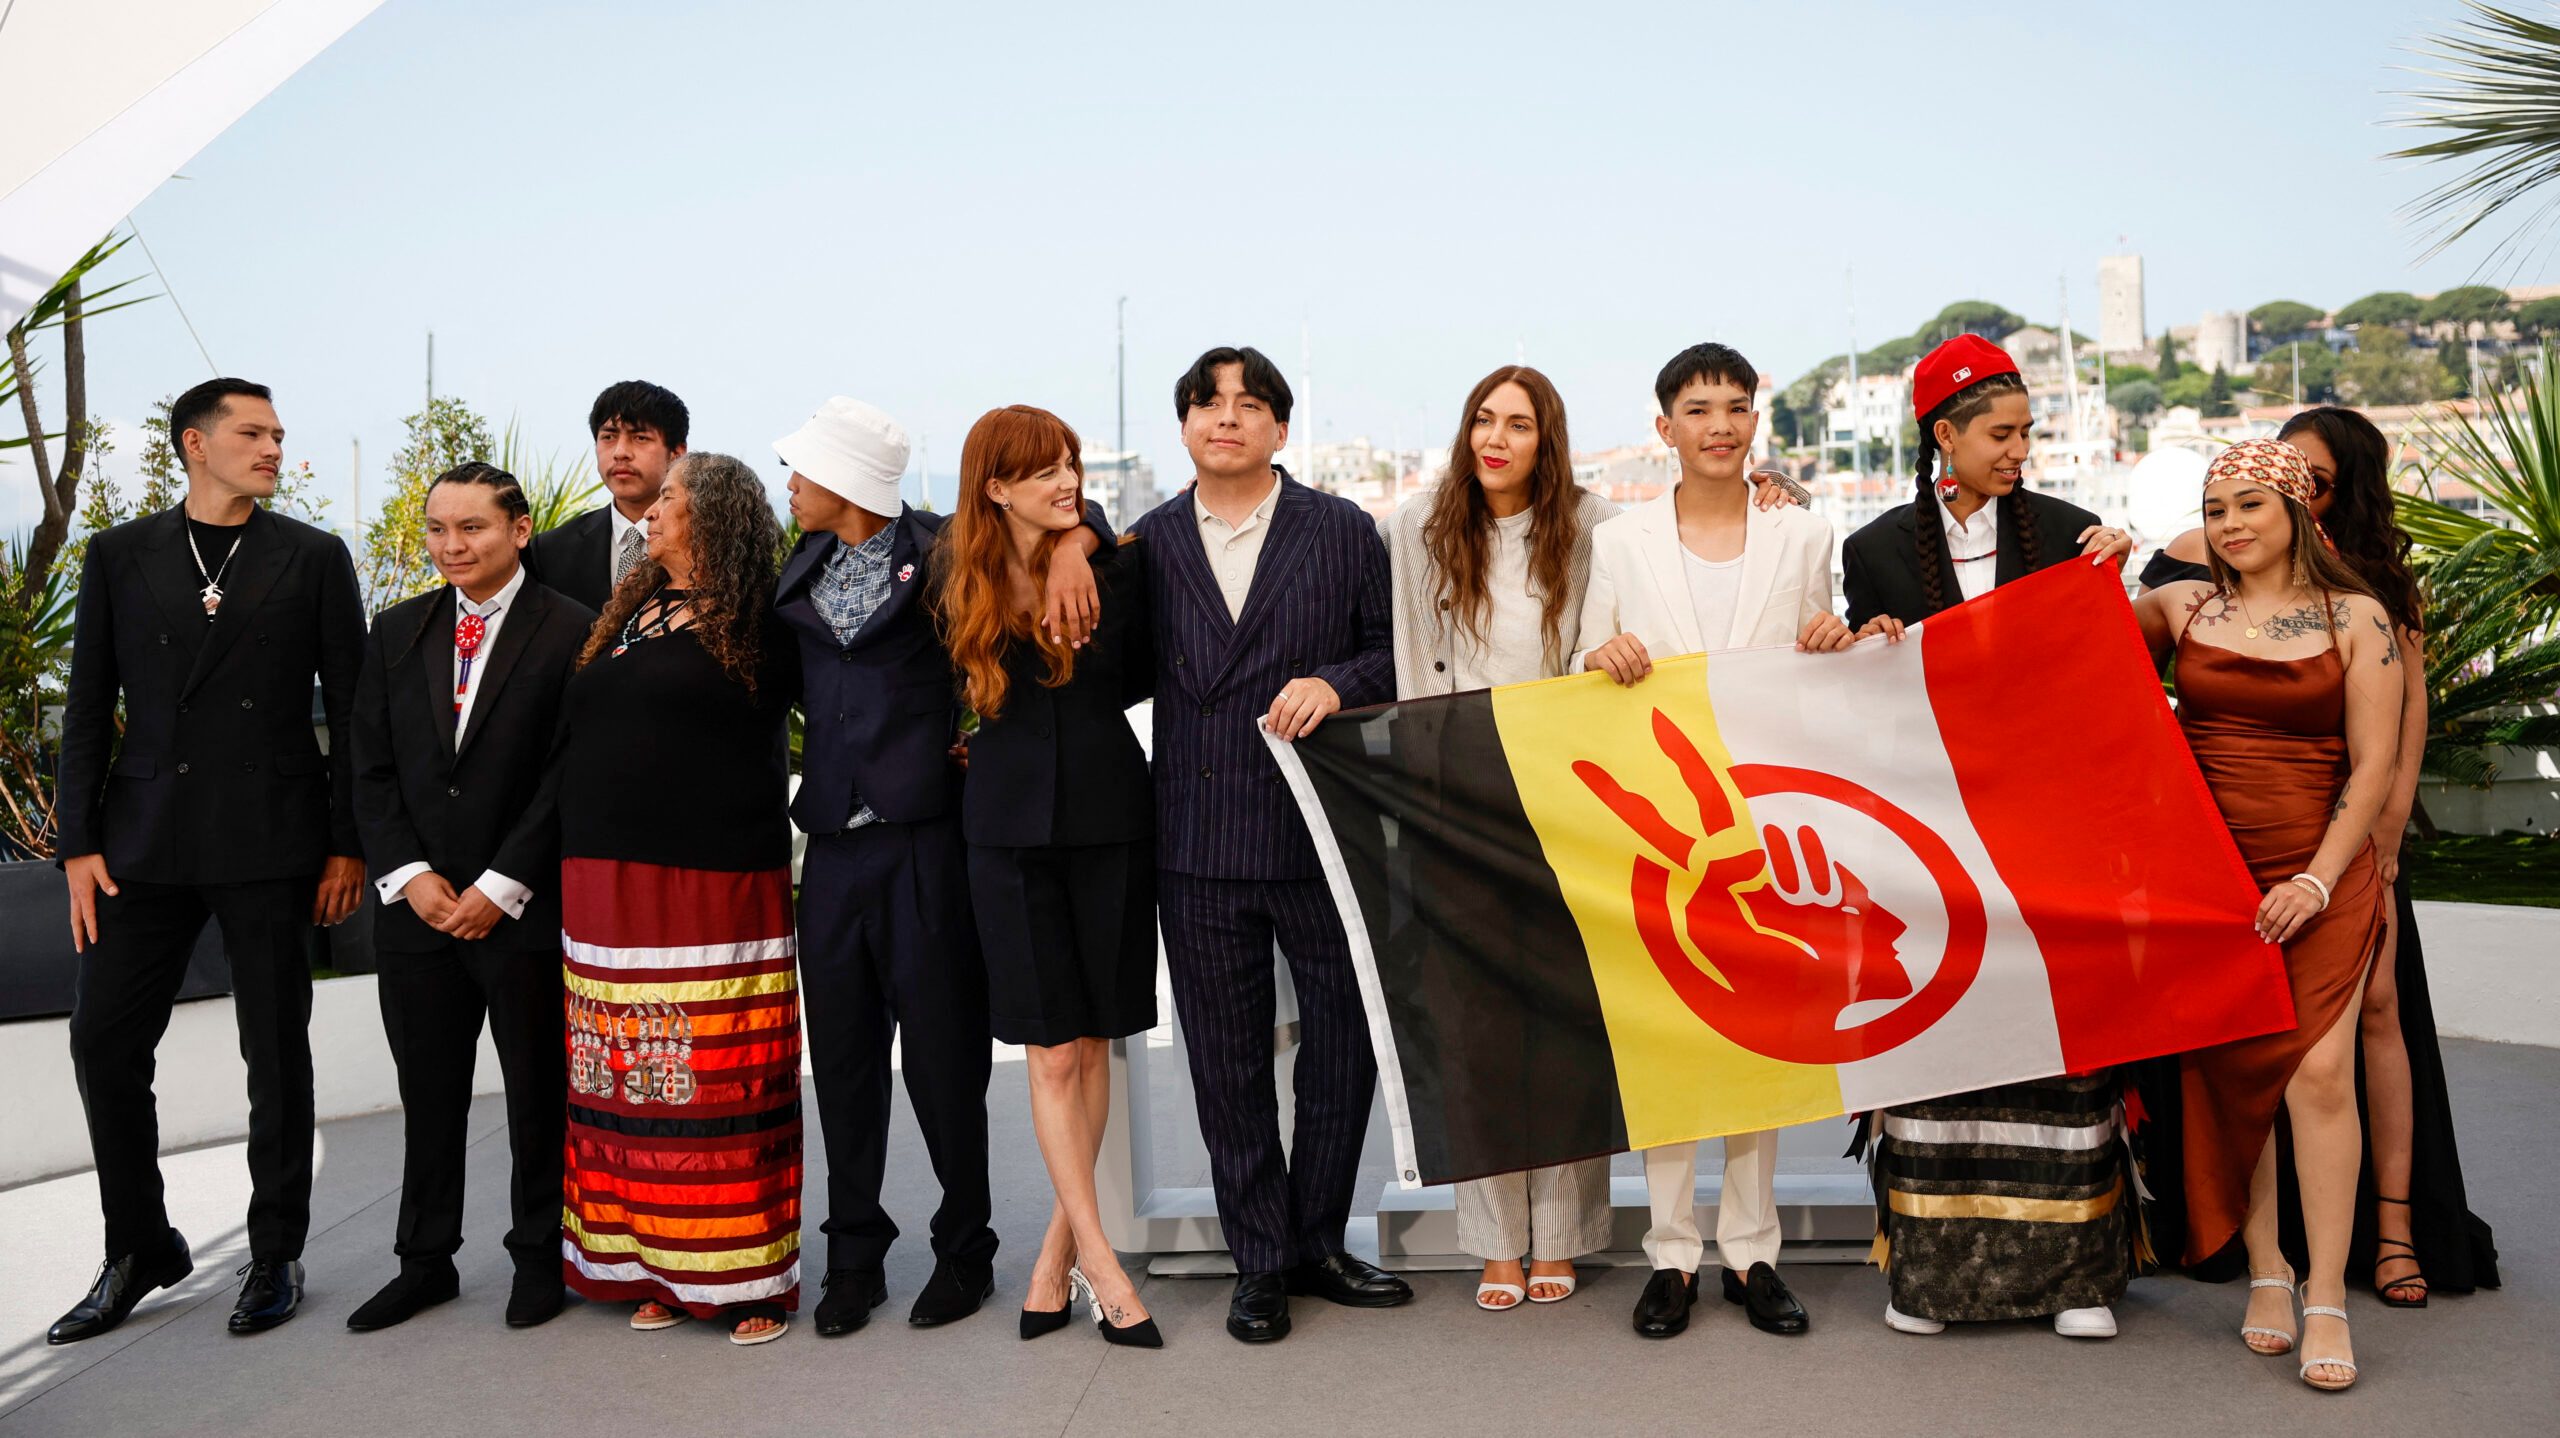 Community-led Lakata film ‘War Pony’ debuts at Cannes